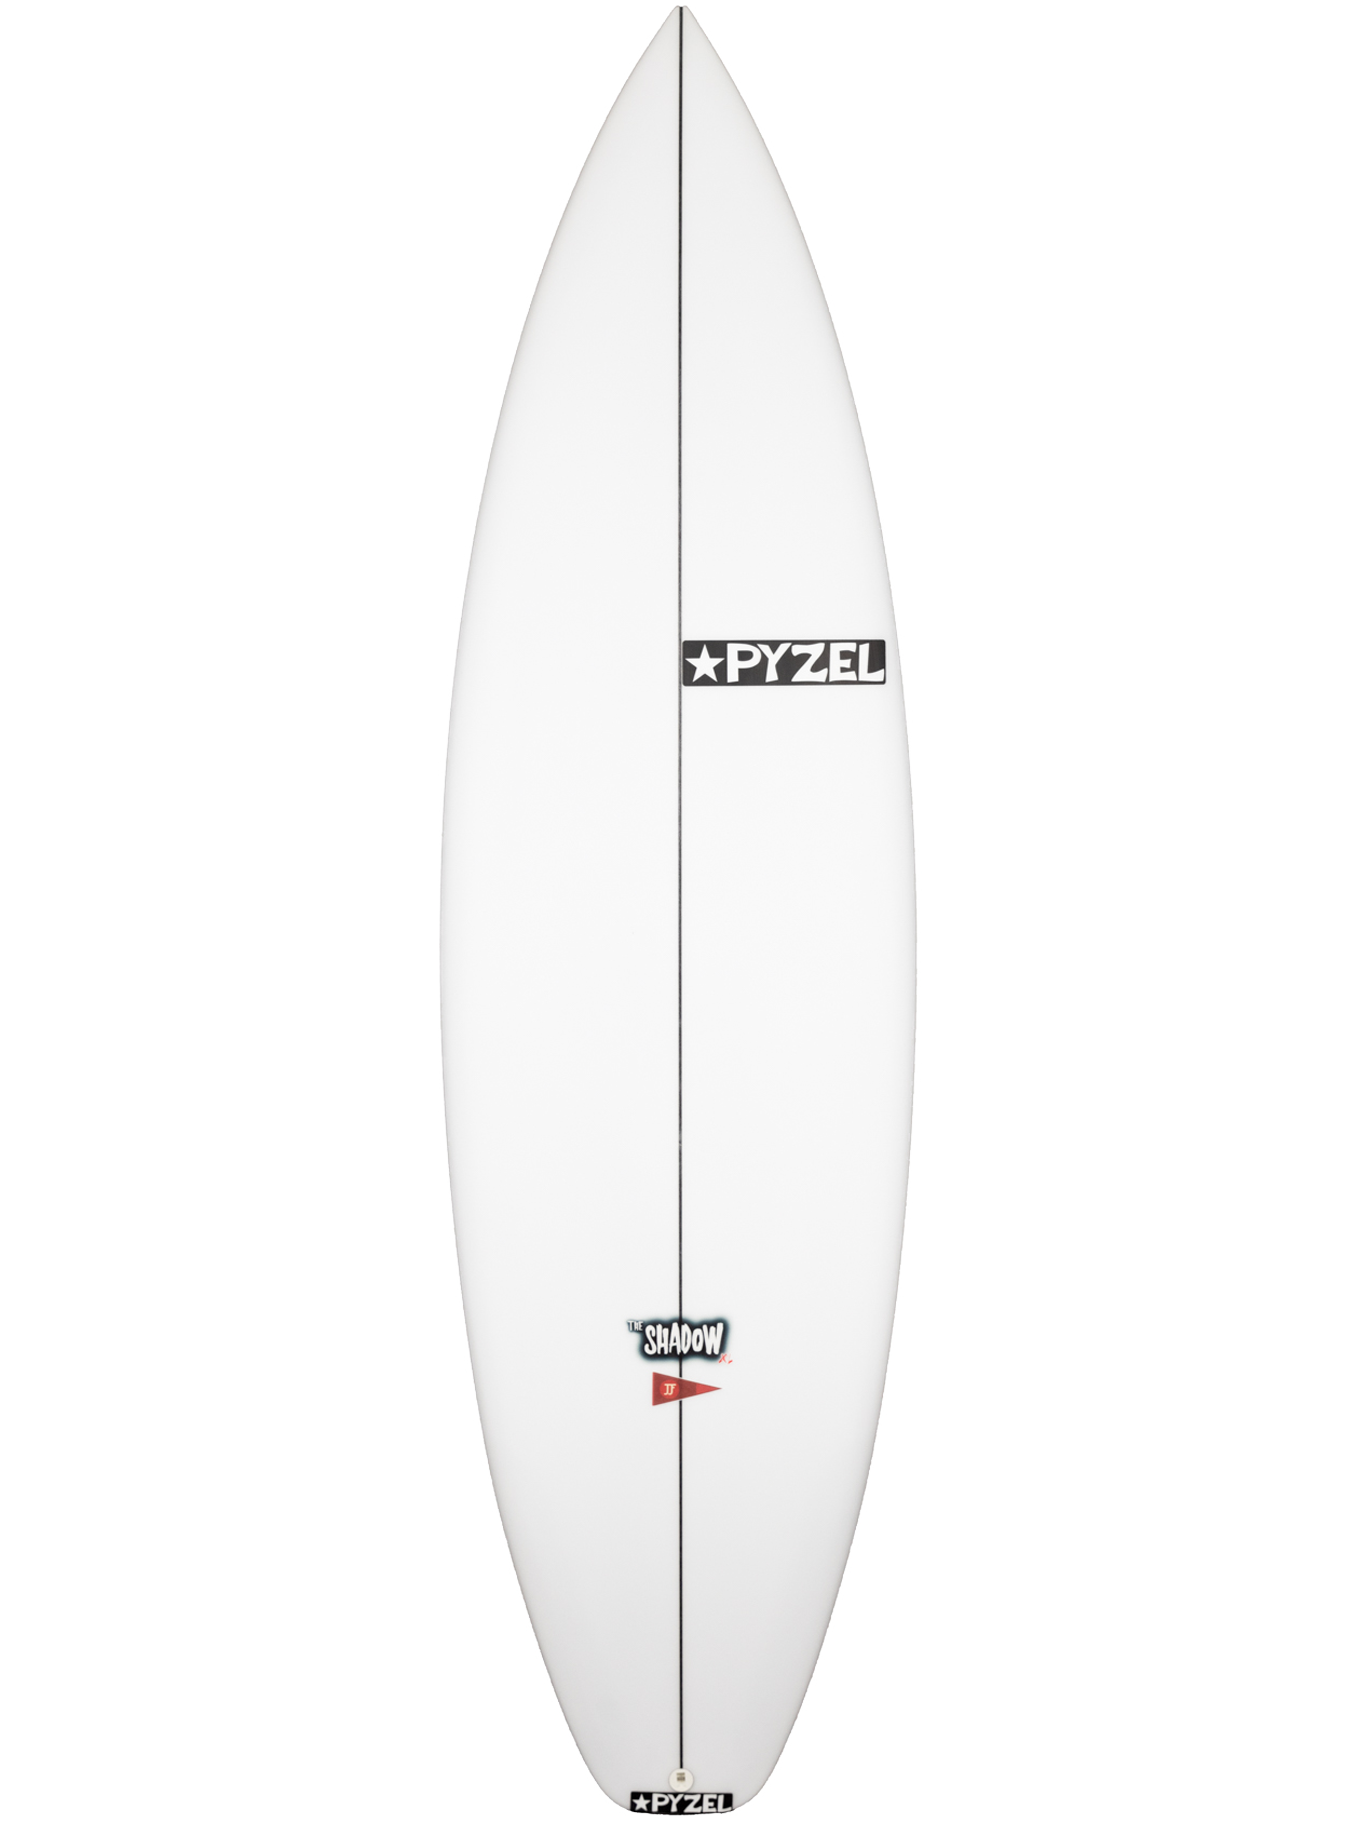 Pyzel Surfboards Sticker 8" Large Mayhem Skate Surf Snowboard Decal Made in USA